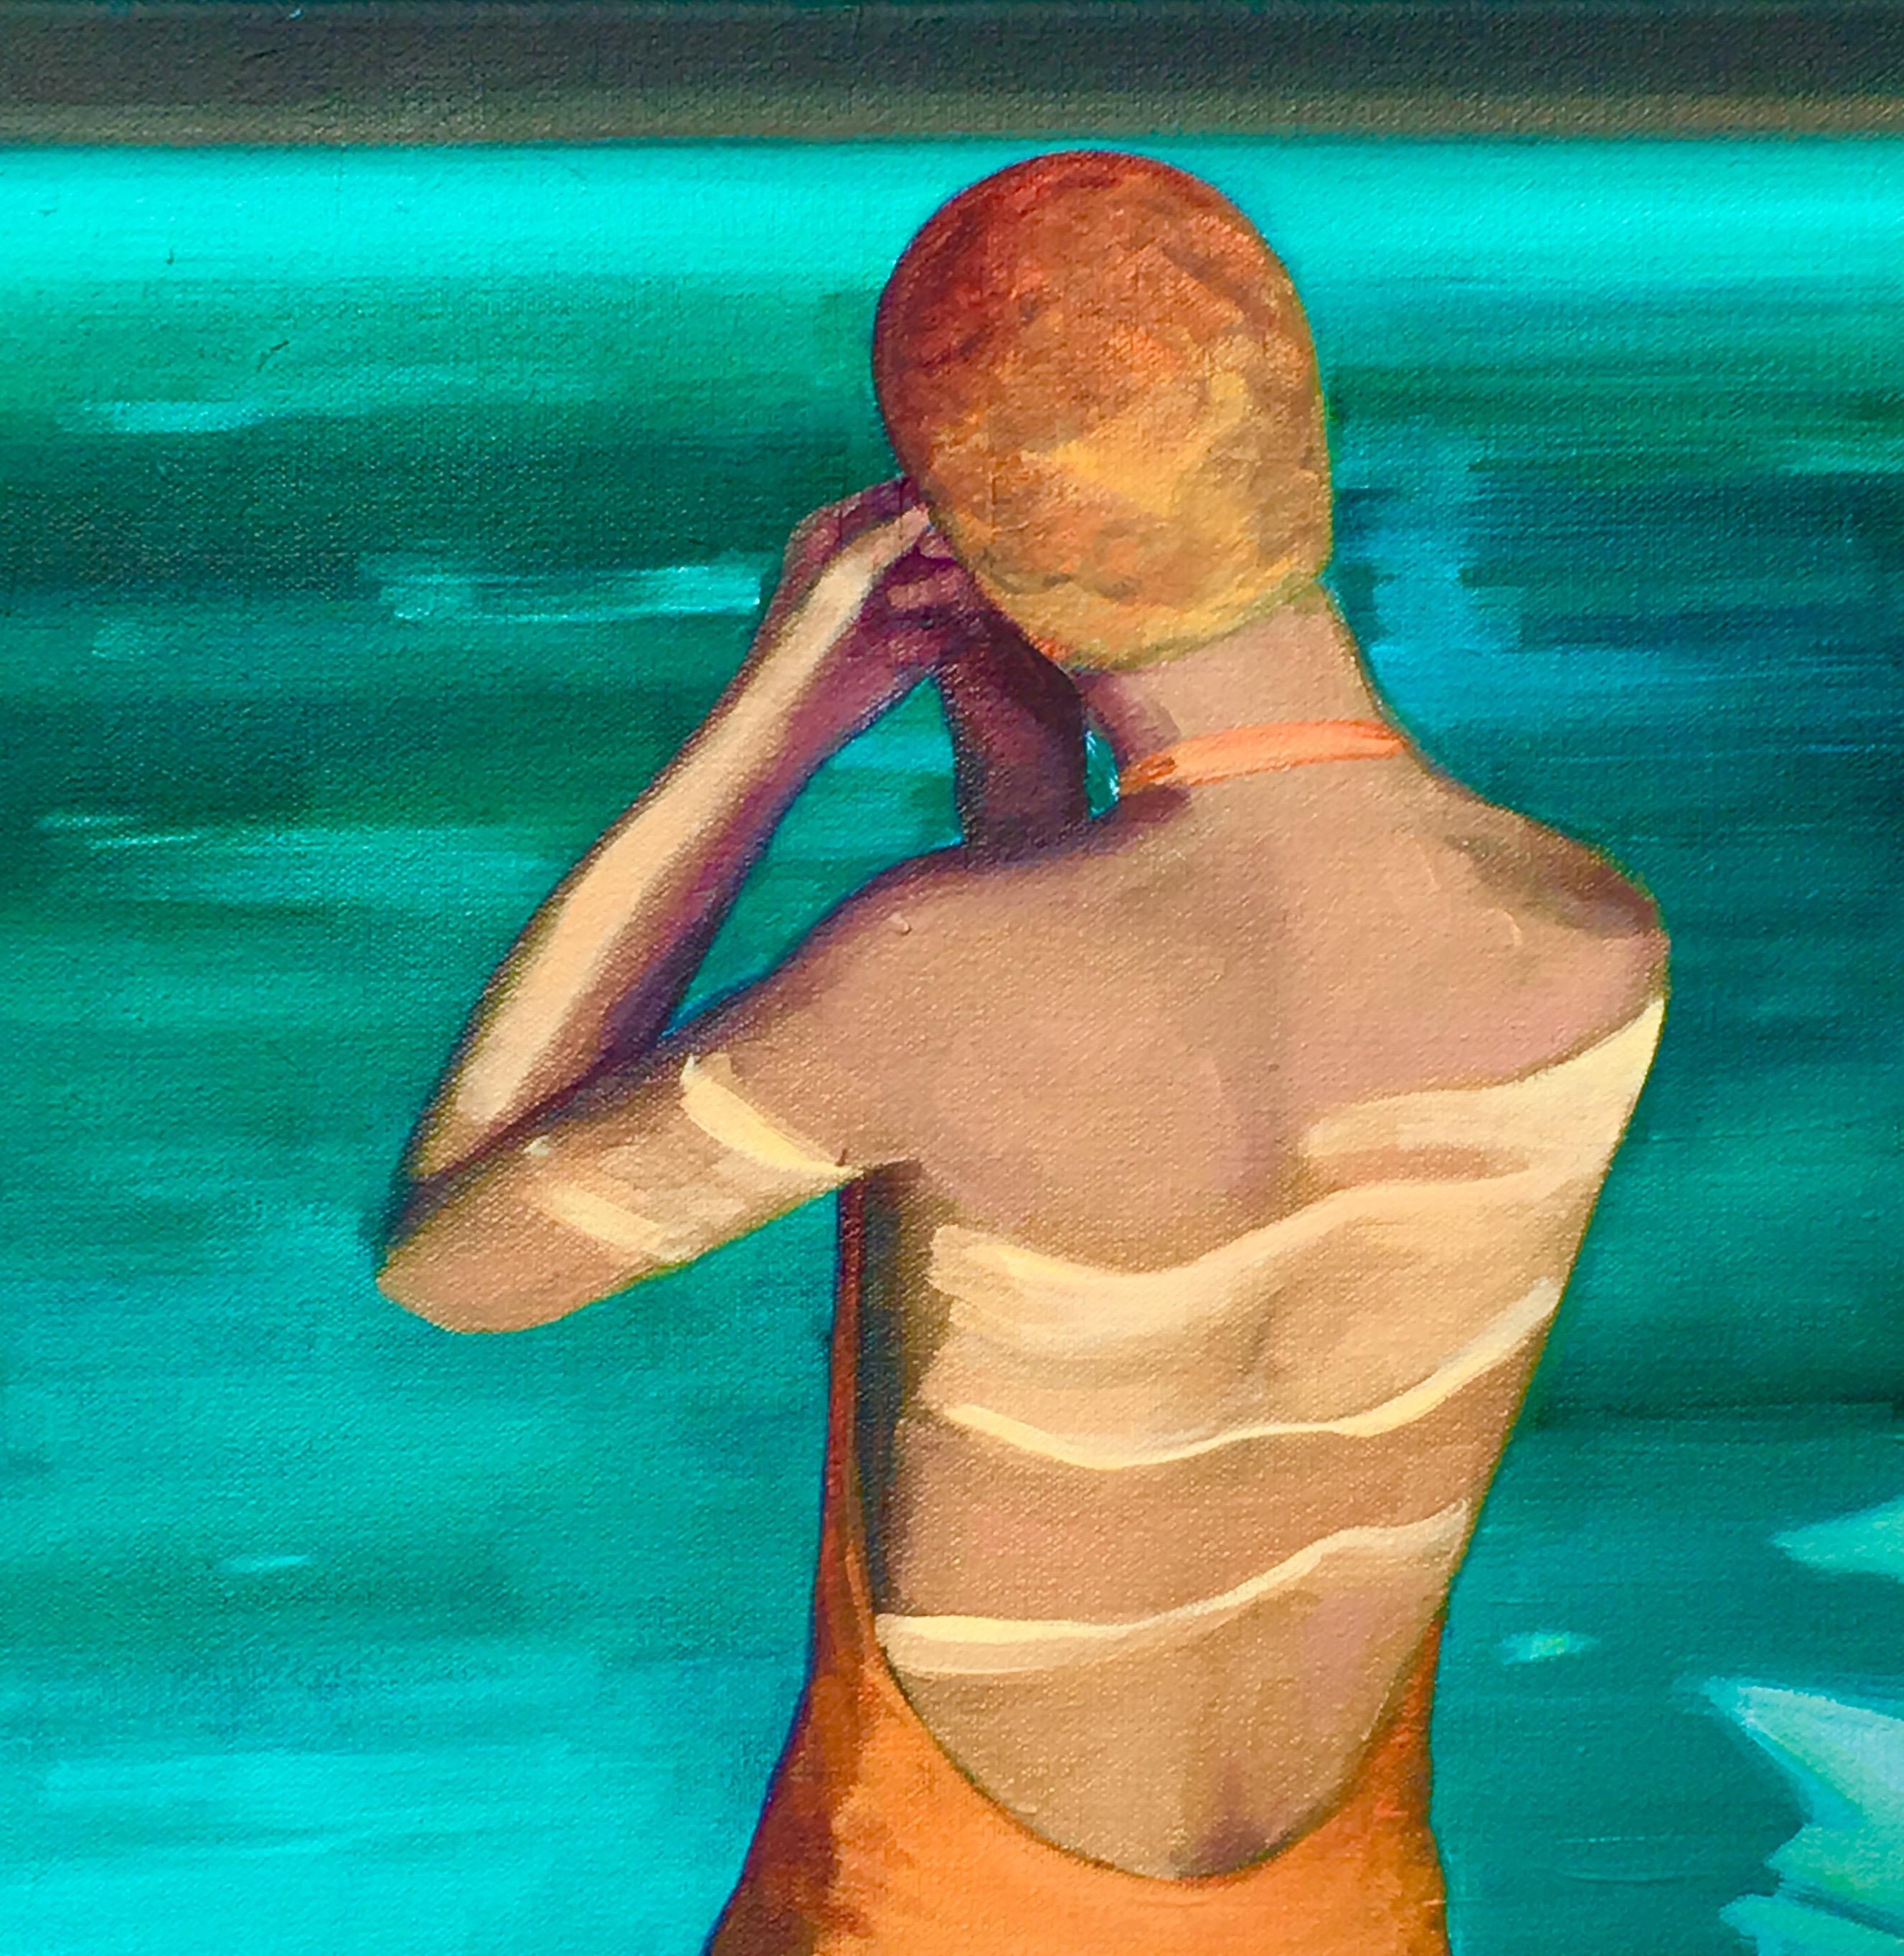 T.S. Harris Figurative Painting - "Indoor Swimming Pool" Oil painting of swimmer in orange cap